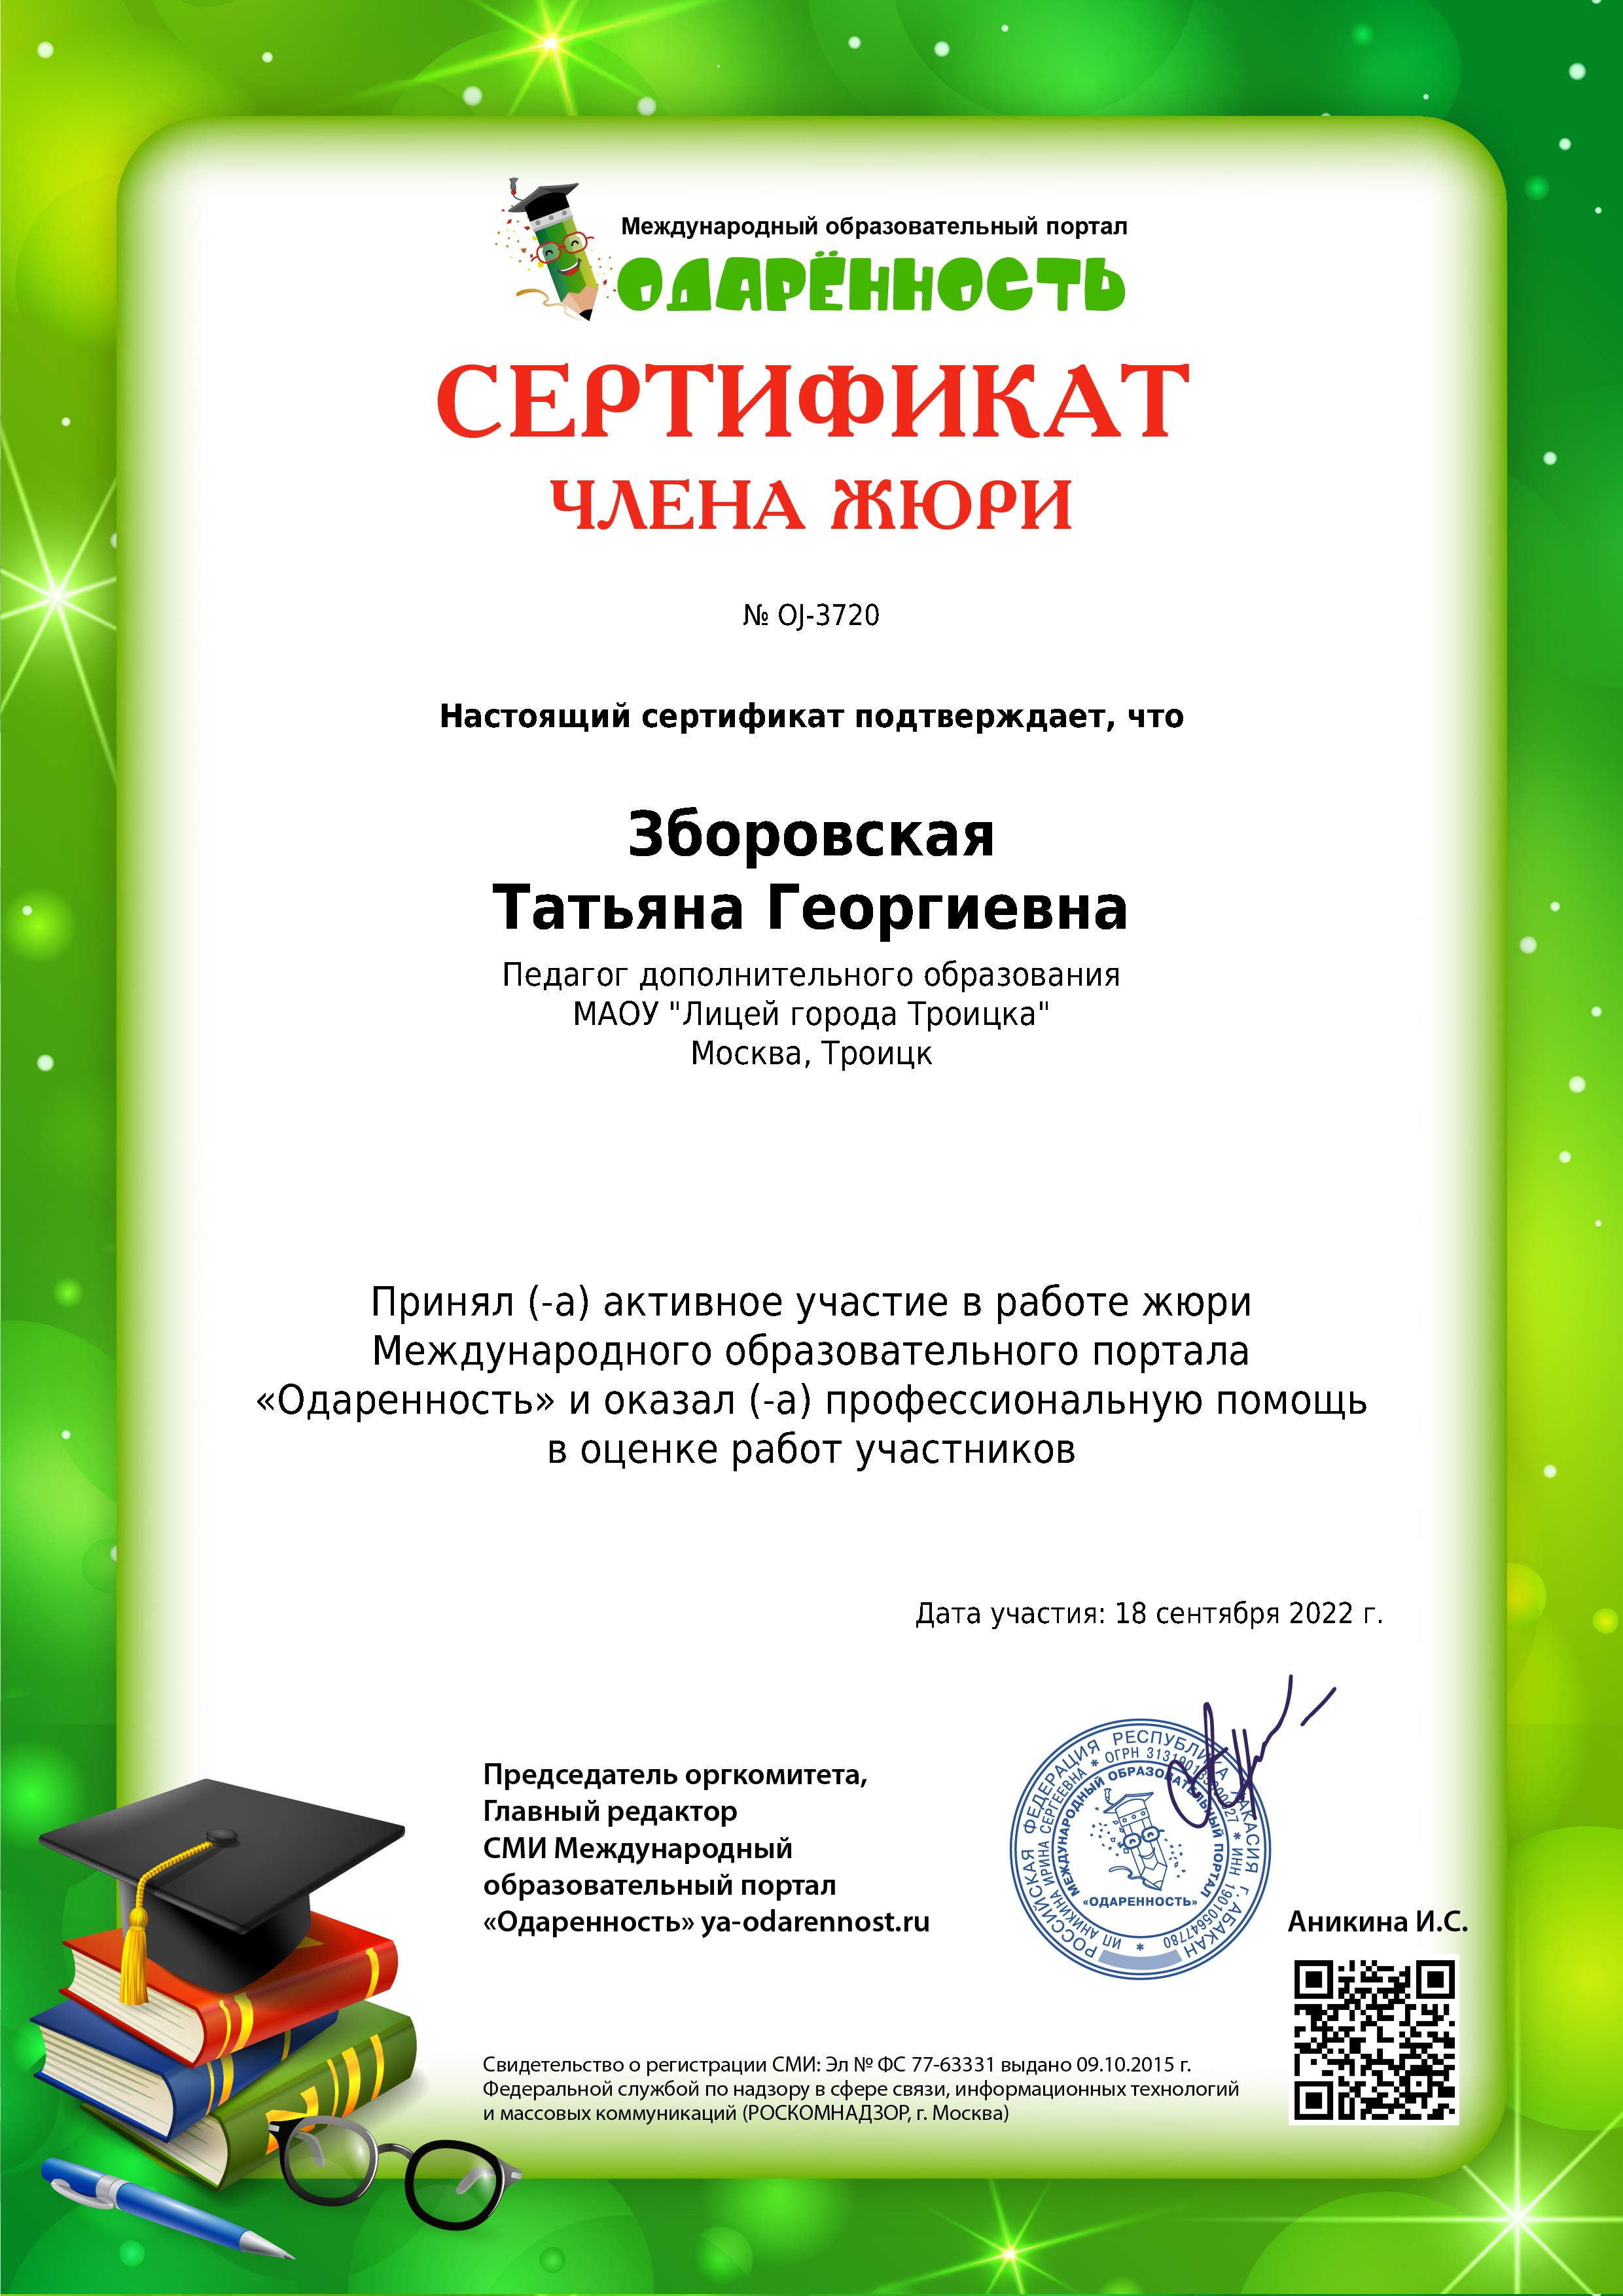 Сертификат члена жюри